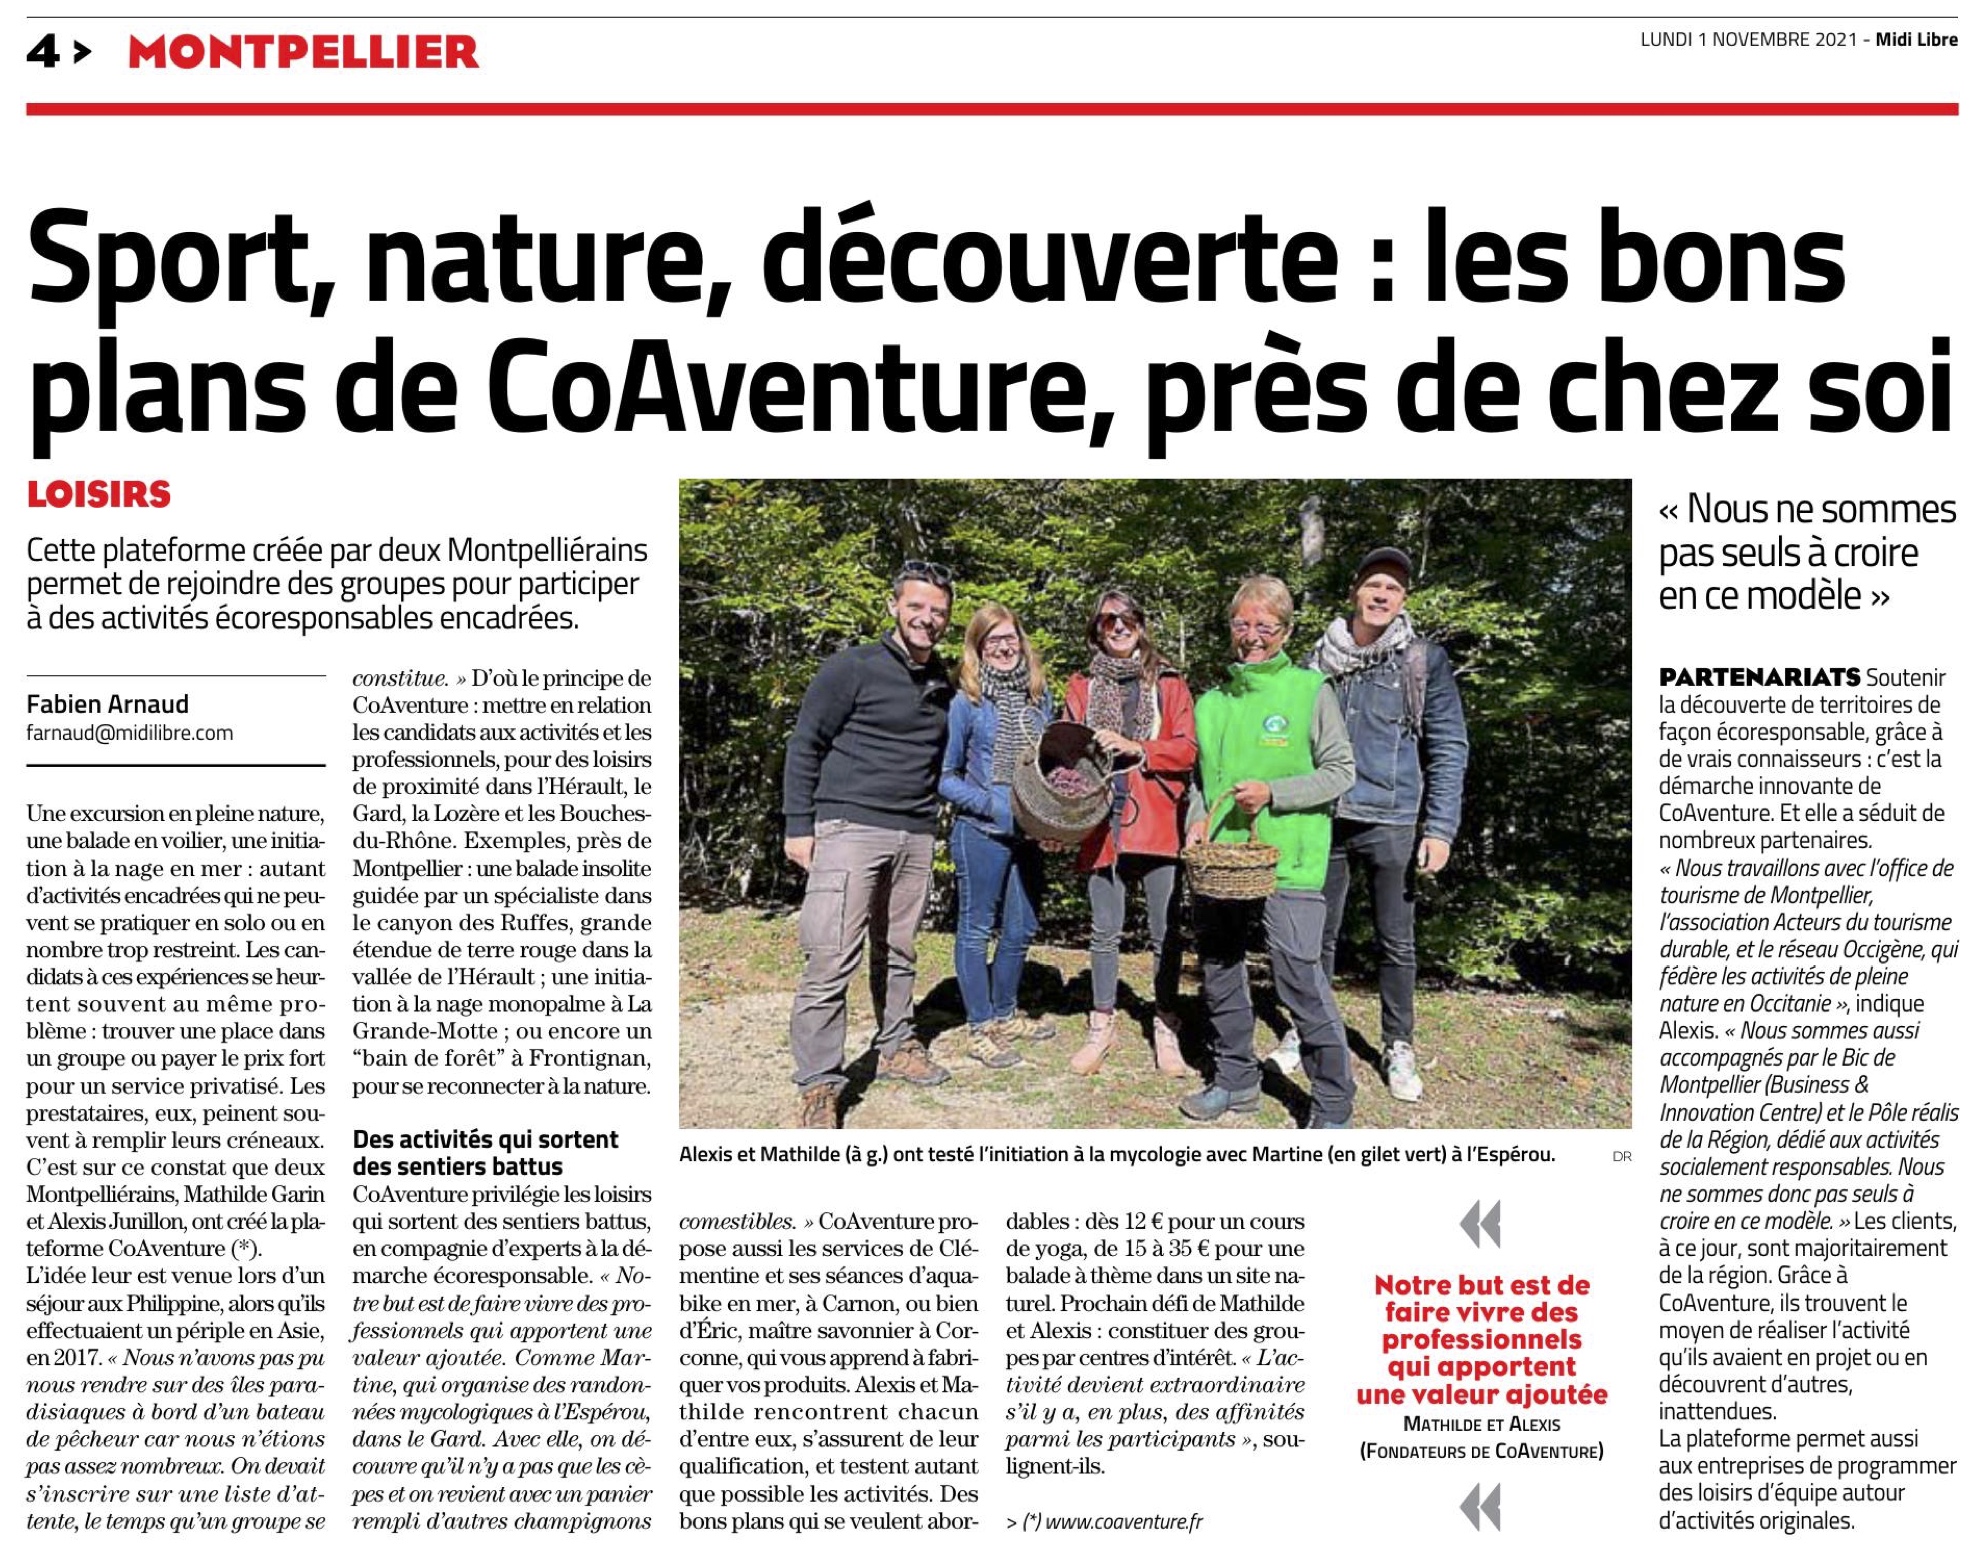 Article de CoAventure dans Midi Libre